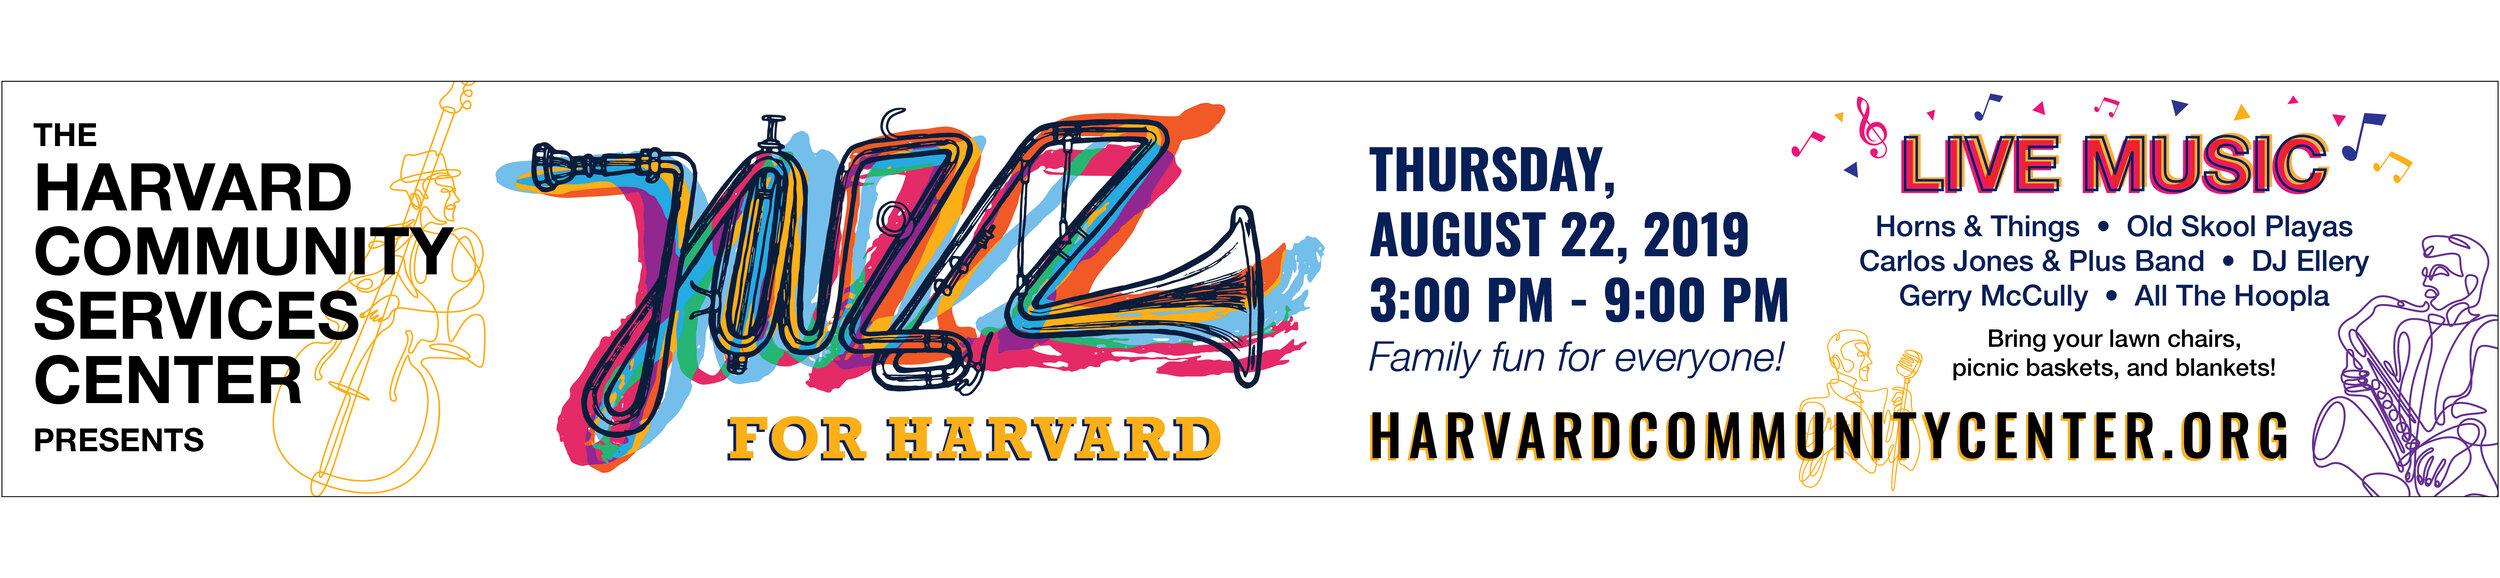 Harvard Community Services Center - Jazz Banner Art 3.jpg